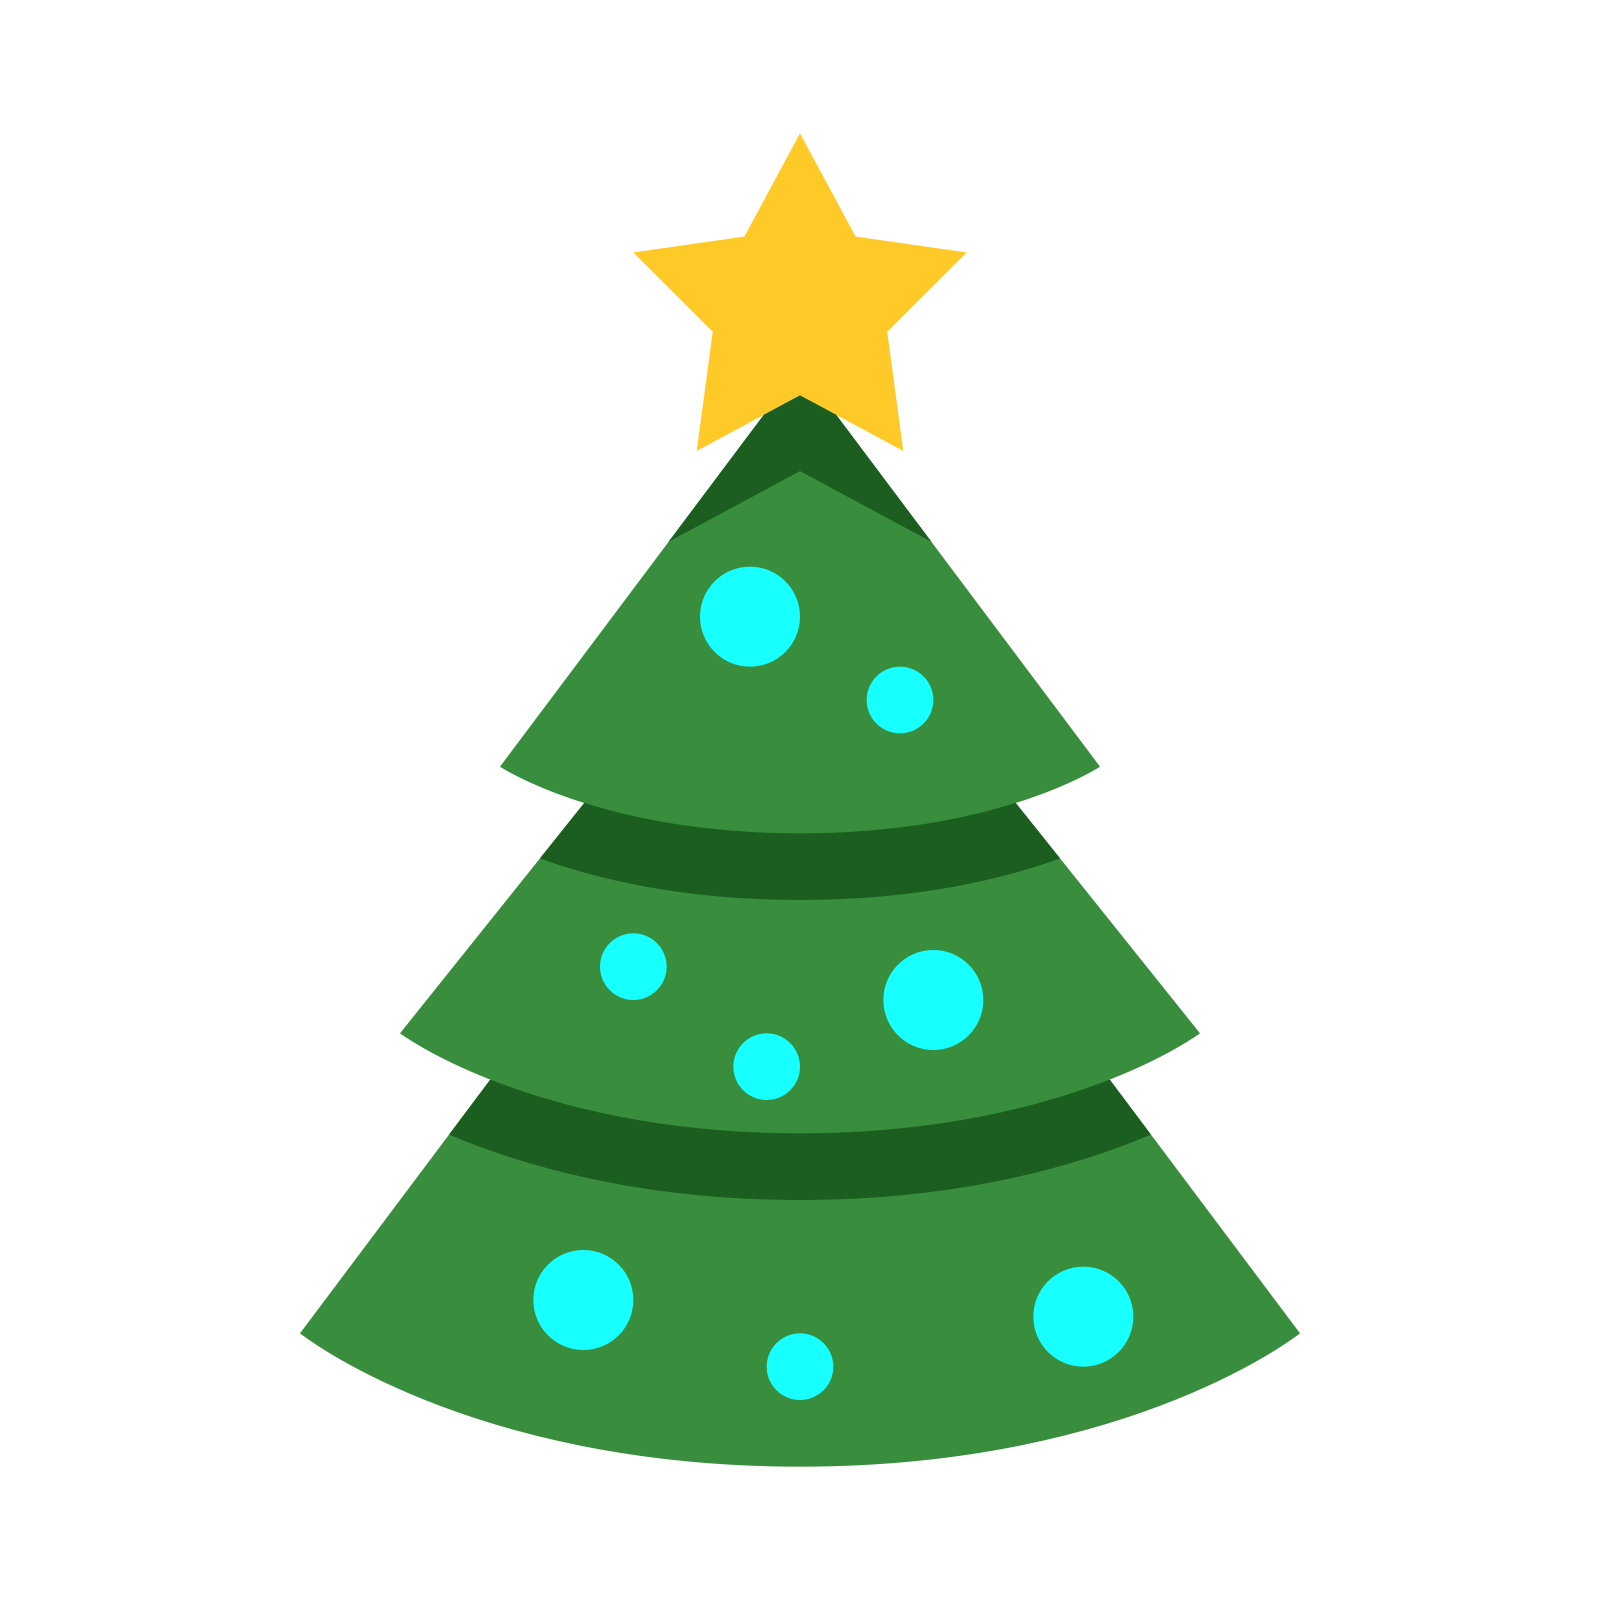 Green Christmas Tree Free PNG Image